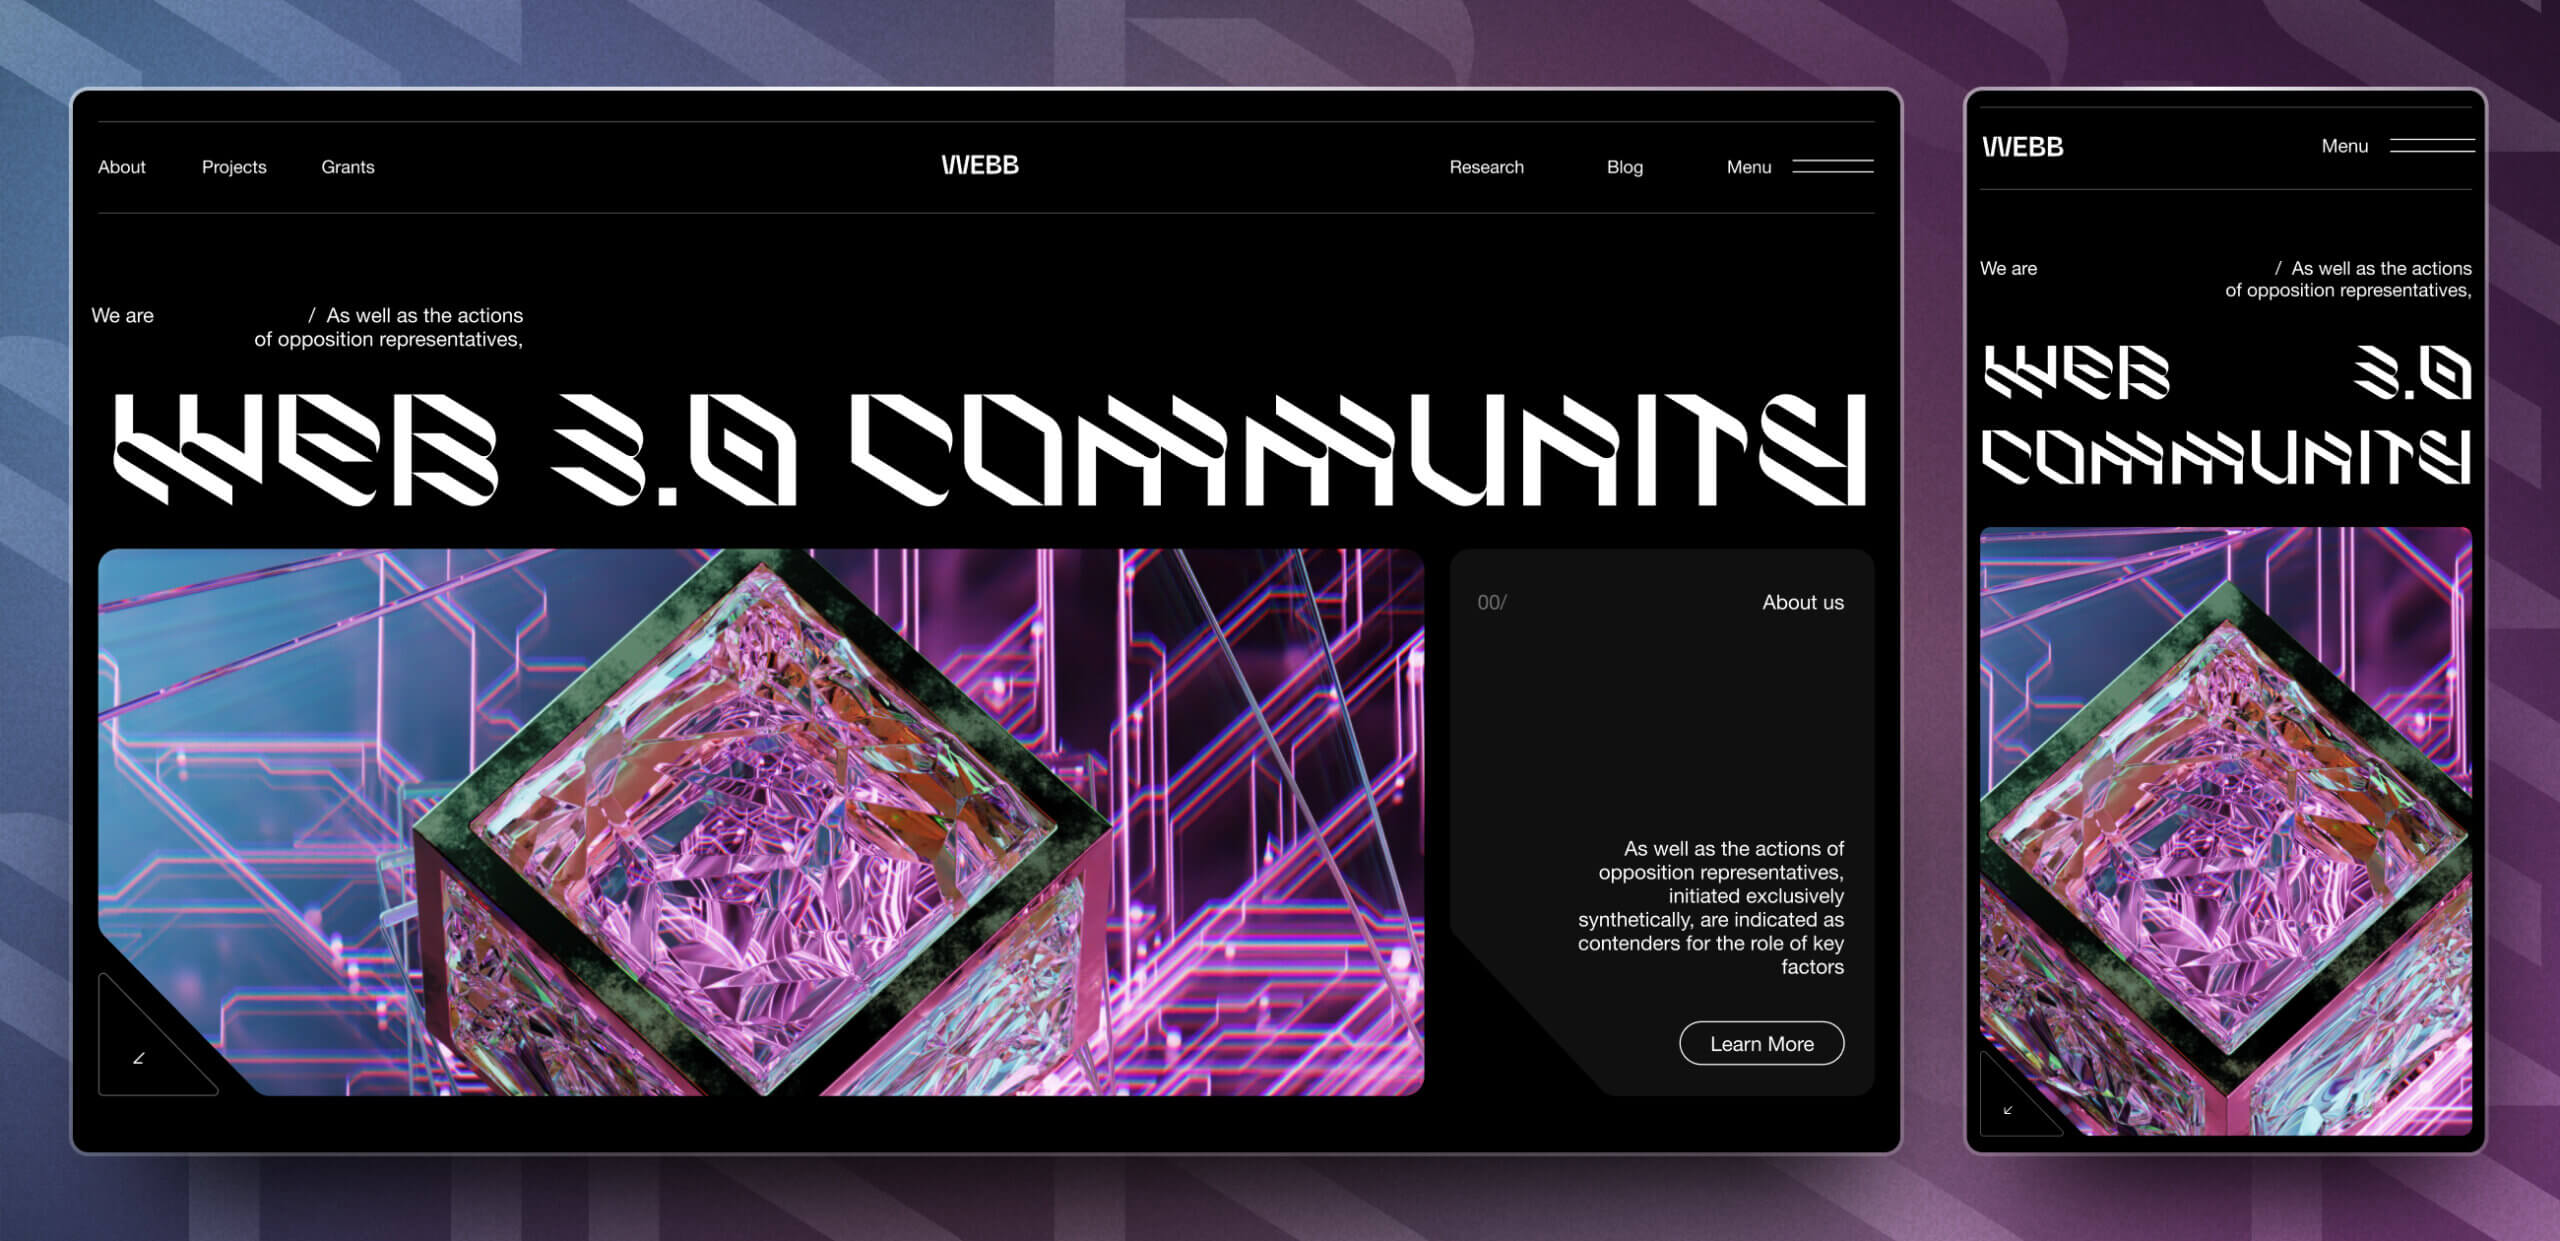 WEBB – Web3 Community platform - Website Development - Photo 1